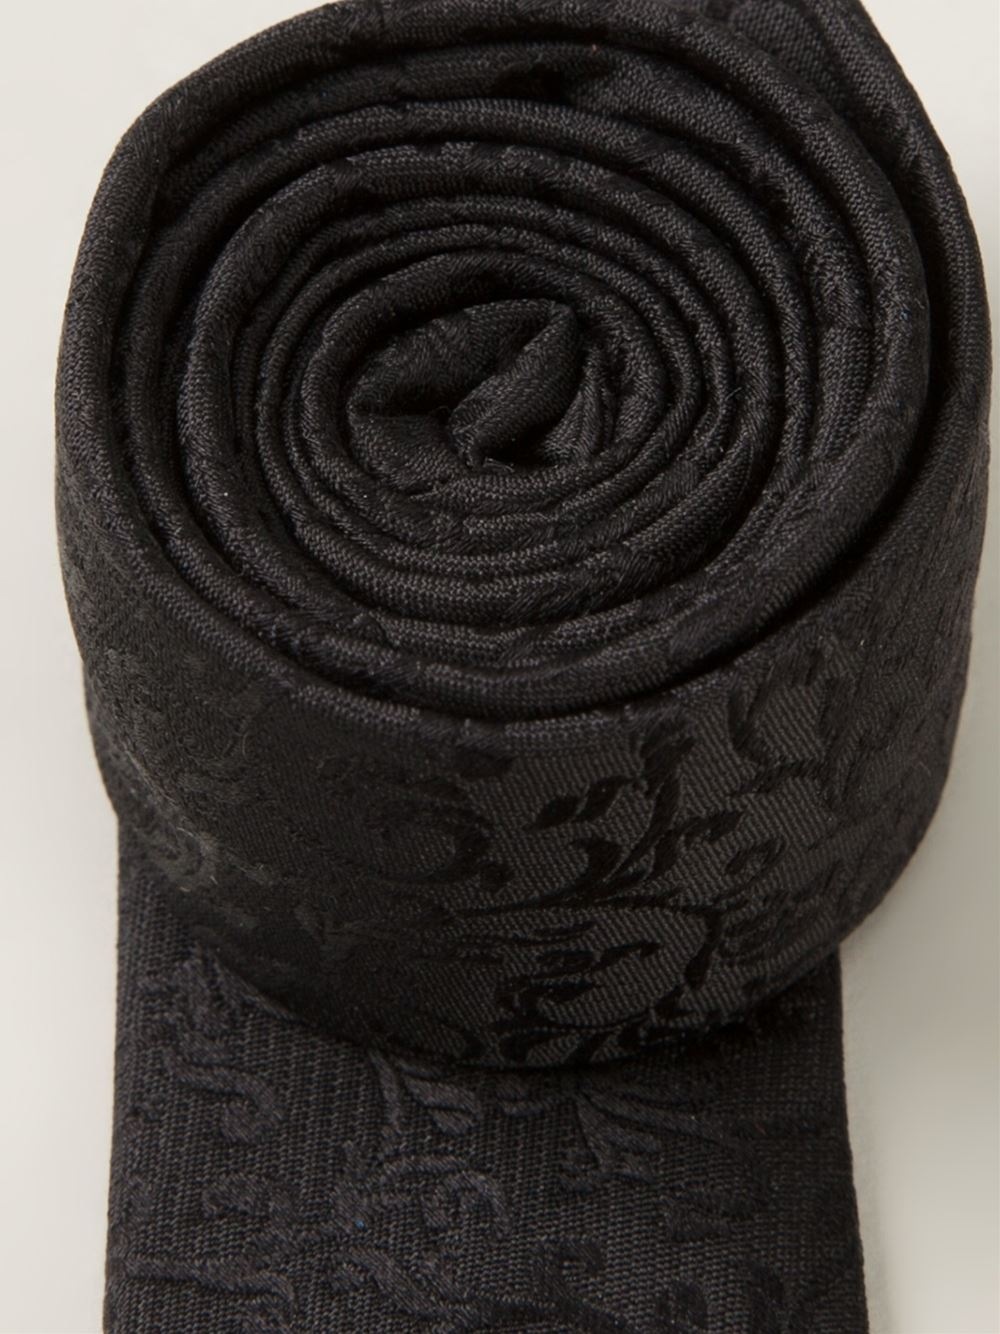 Saint Laurent Baroque Jacquard Tie in Black for Men - Lyst